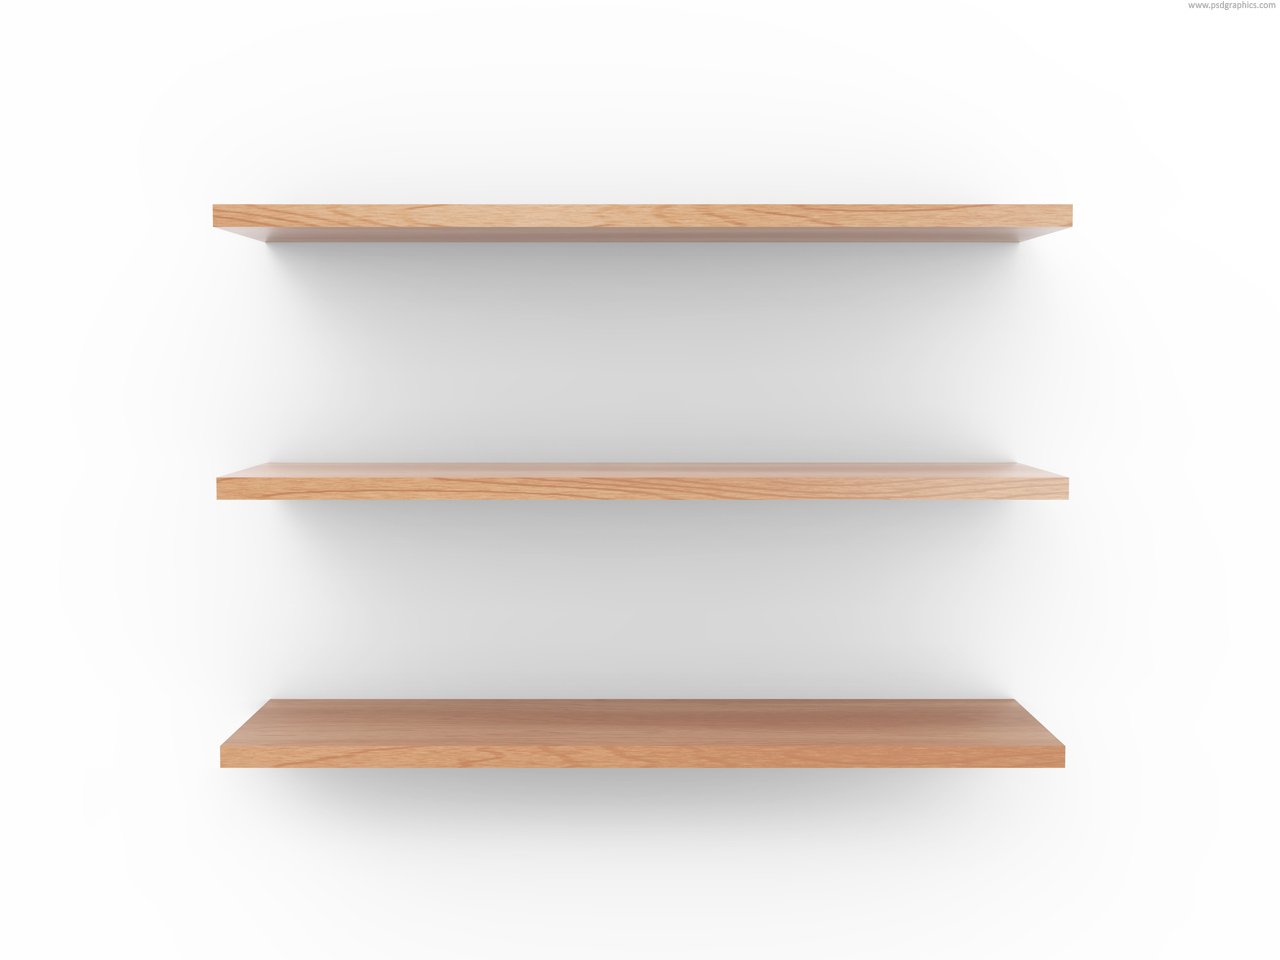 Medium size preview (1280x960px): Wooden shelf